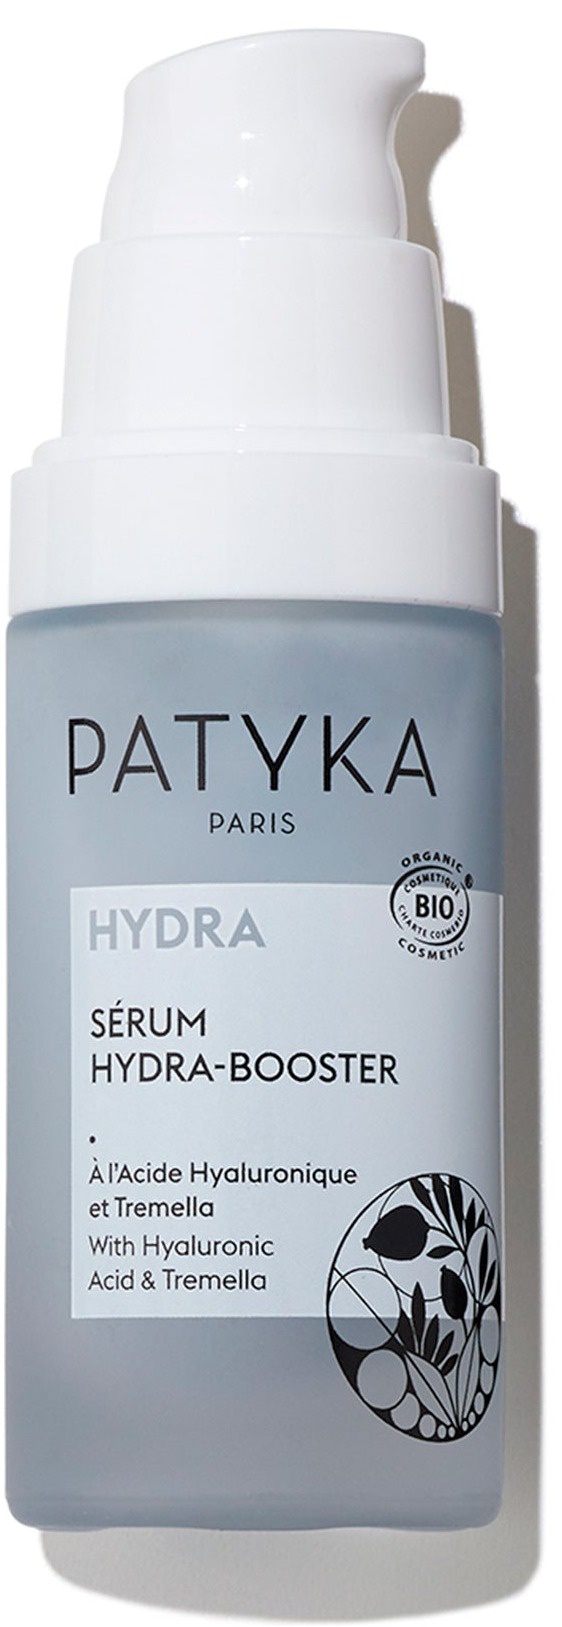 Patyka Hydra-booster Serum